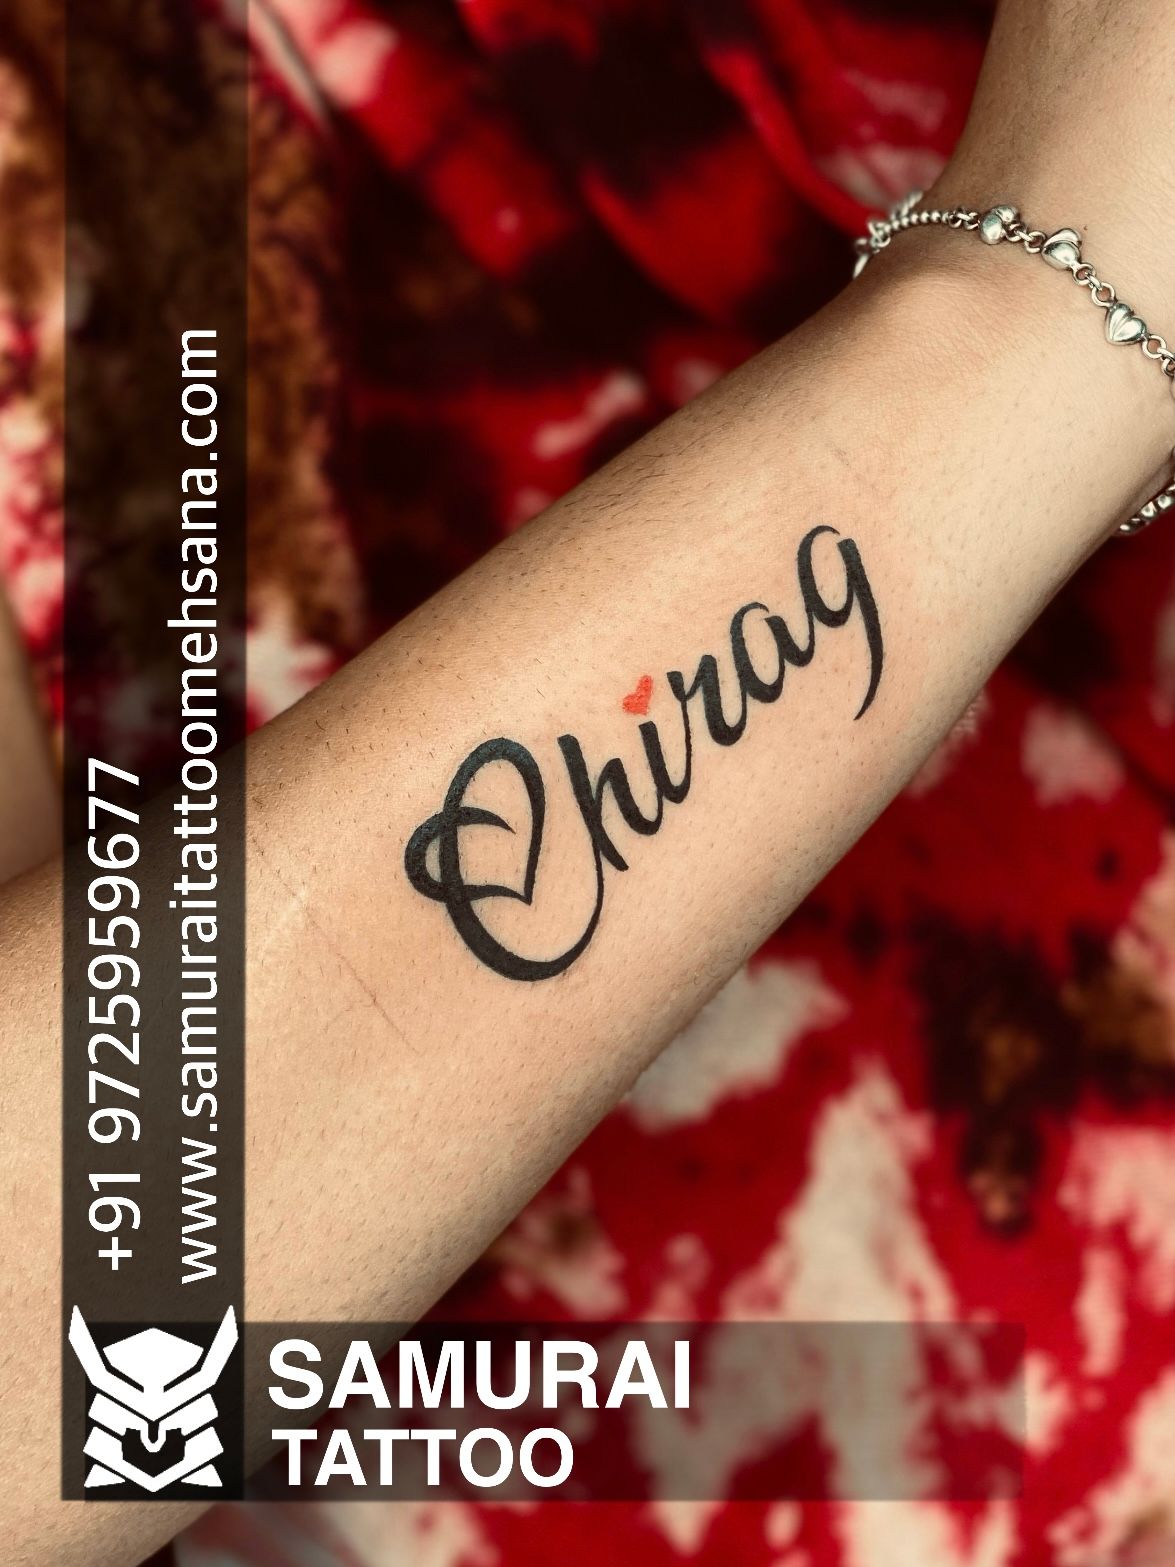 Tattoo uploaded by Vipul Chaudhary • Chirag name tattoo |Chirag ...